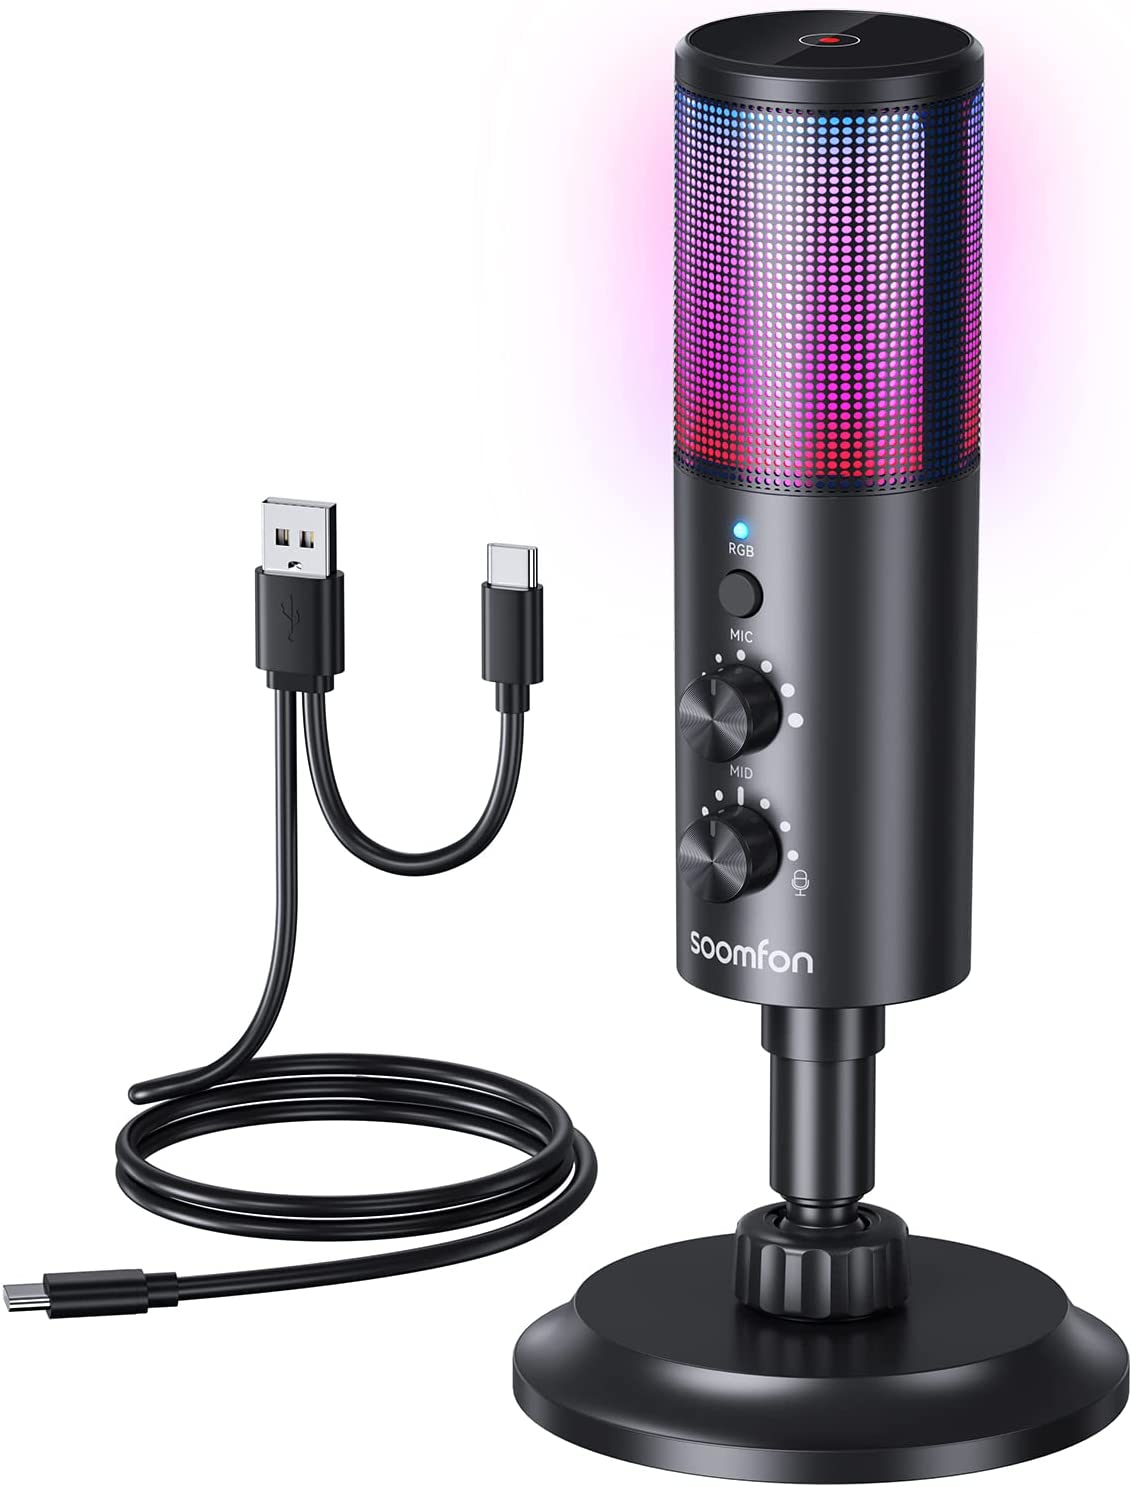 SOOMFON Gaming USB Microphone | eTeknix